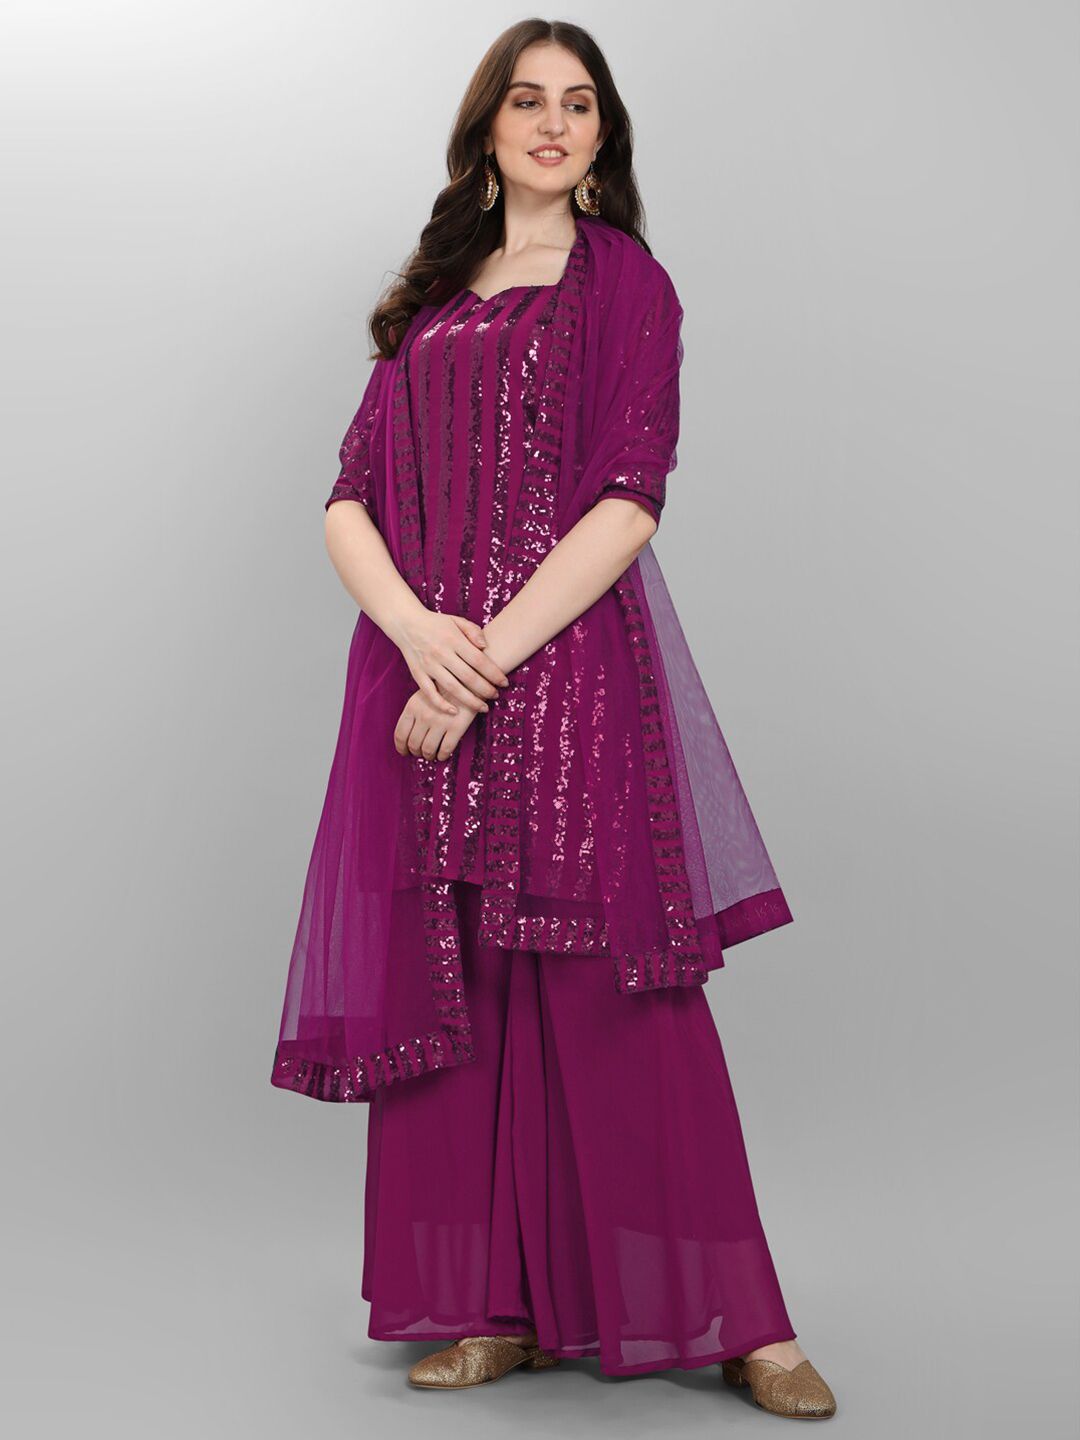 JATRIQQ Purple Embroidered Sequined Silk Georgette Semi-Stitched Dress Material Price in India